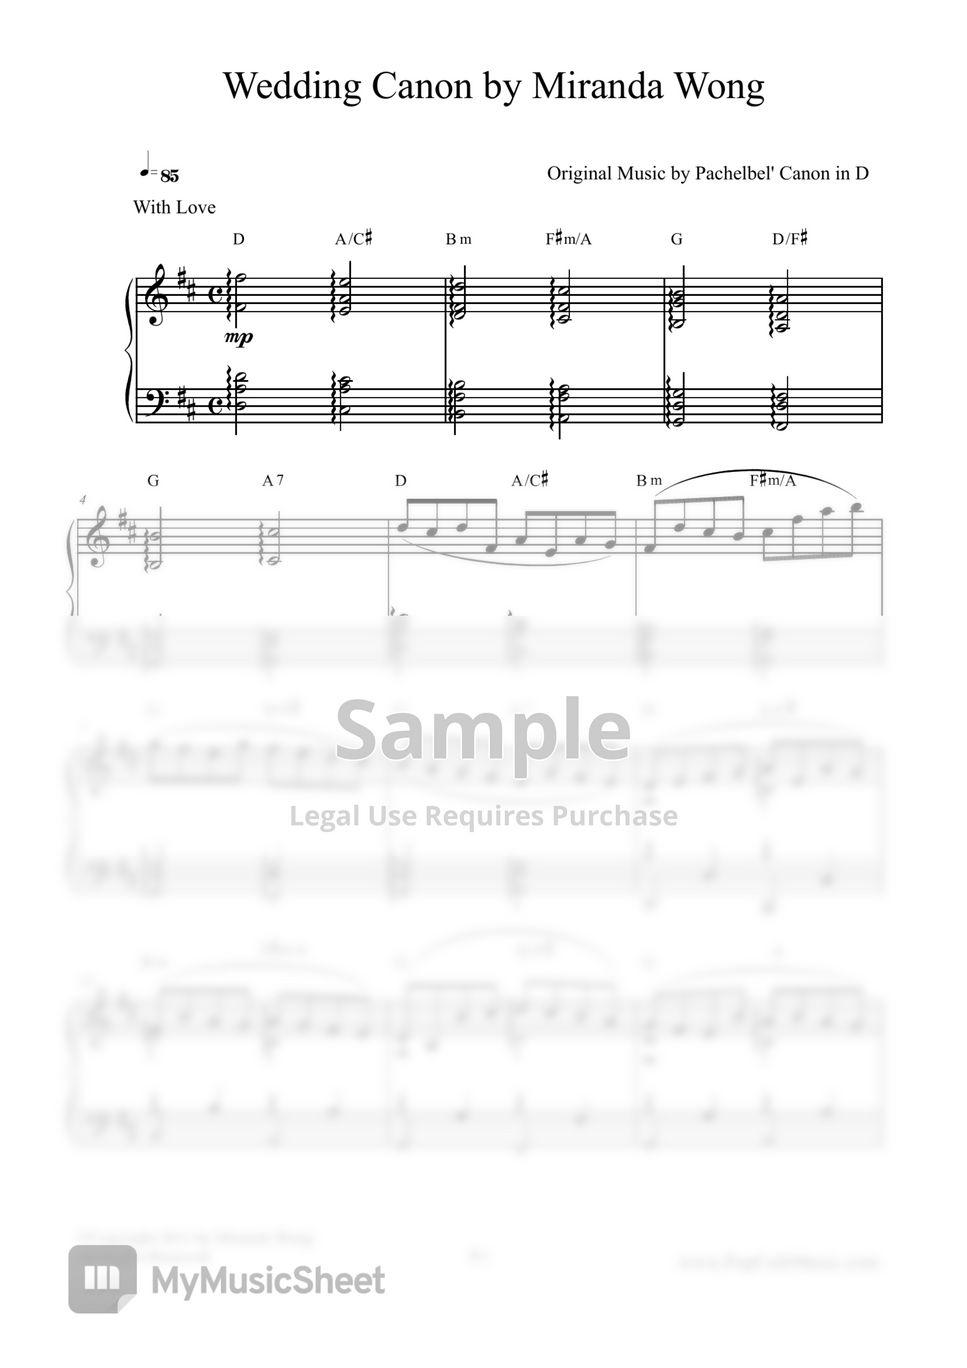 Pachelbel - Wedding Canon - Romantic Wedding Piano Music in D Key (New Popular Version) by Miranda Wong